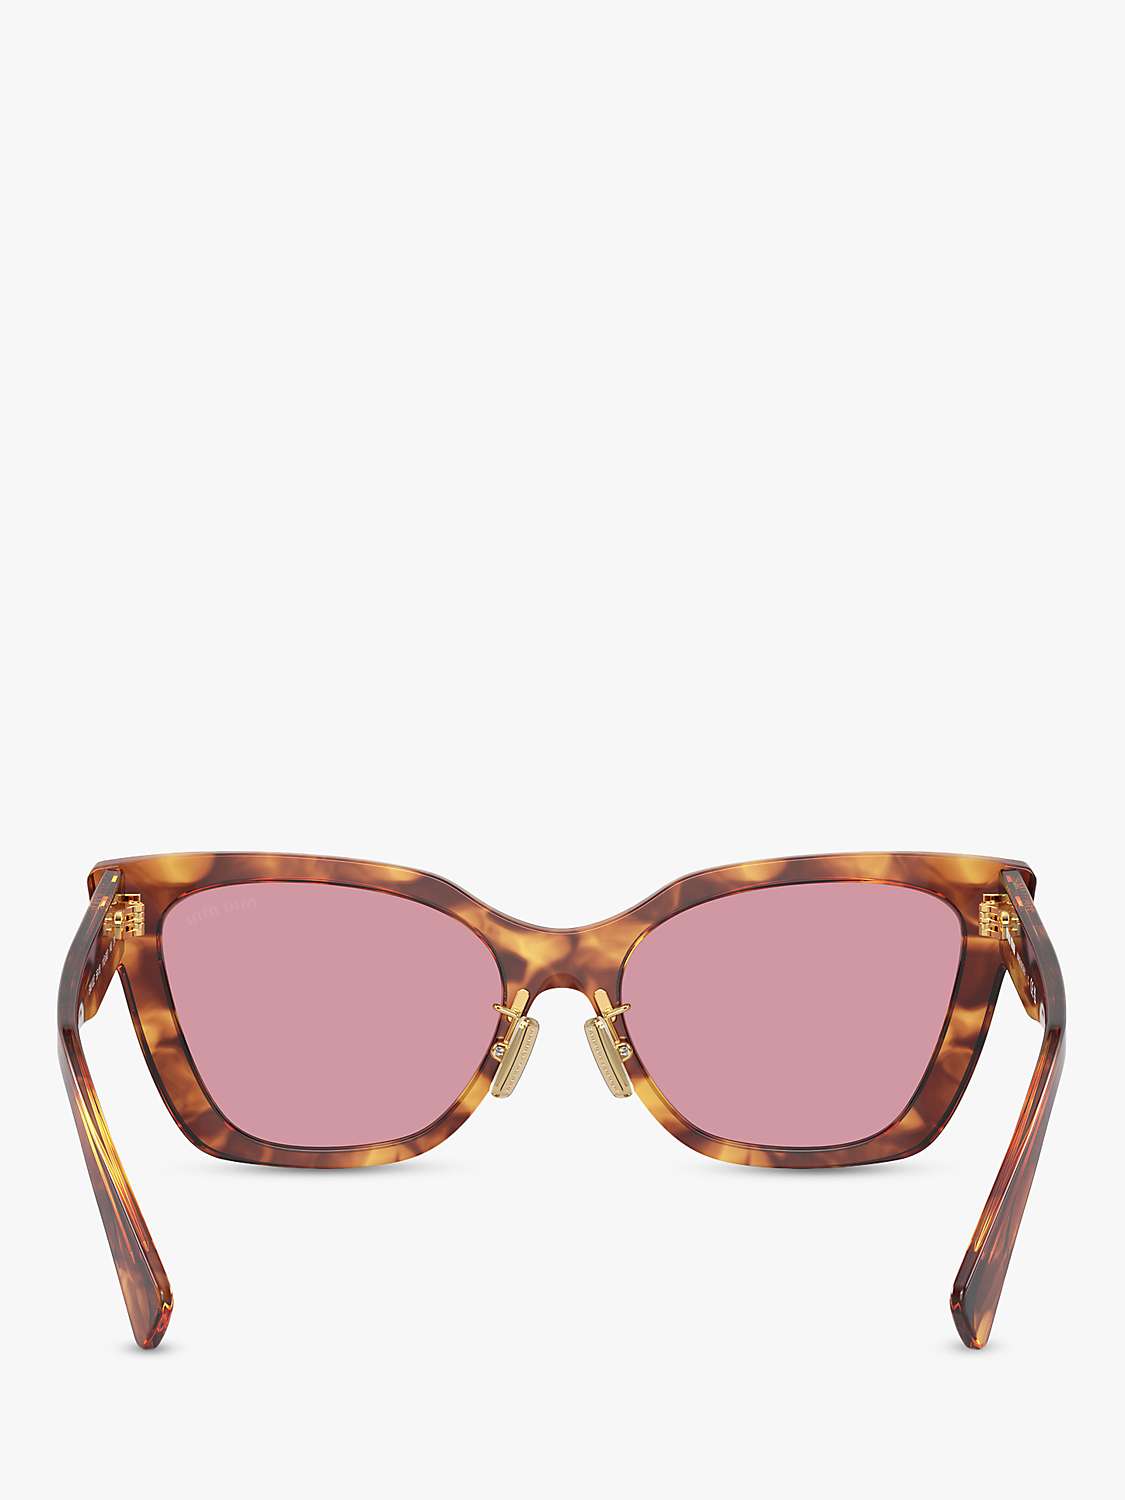 Buy Miu Miu MU 02ZS Women's Cat's Eye Sunglasses, Striped Tobacco/Pink Online at johnlewis.com